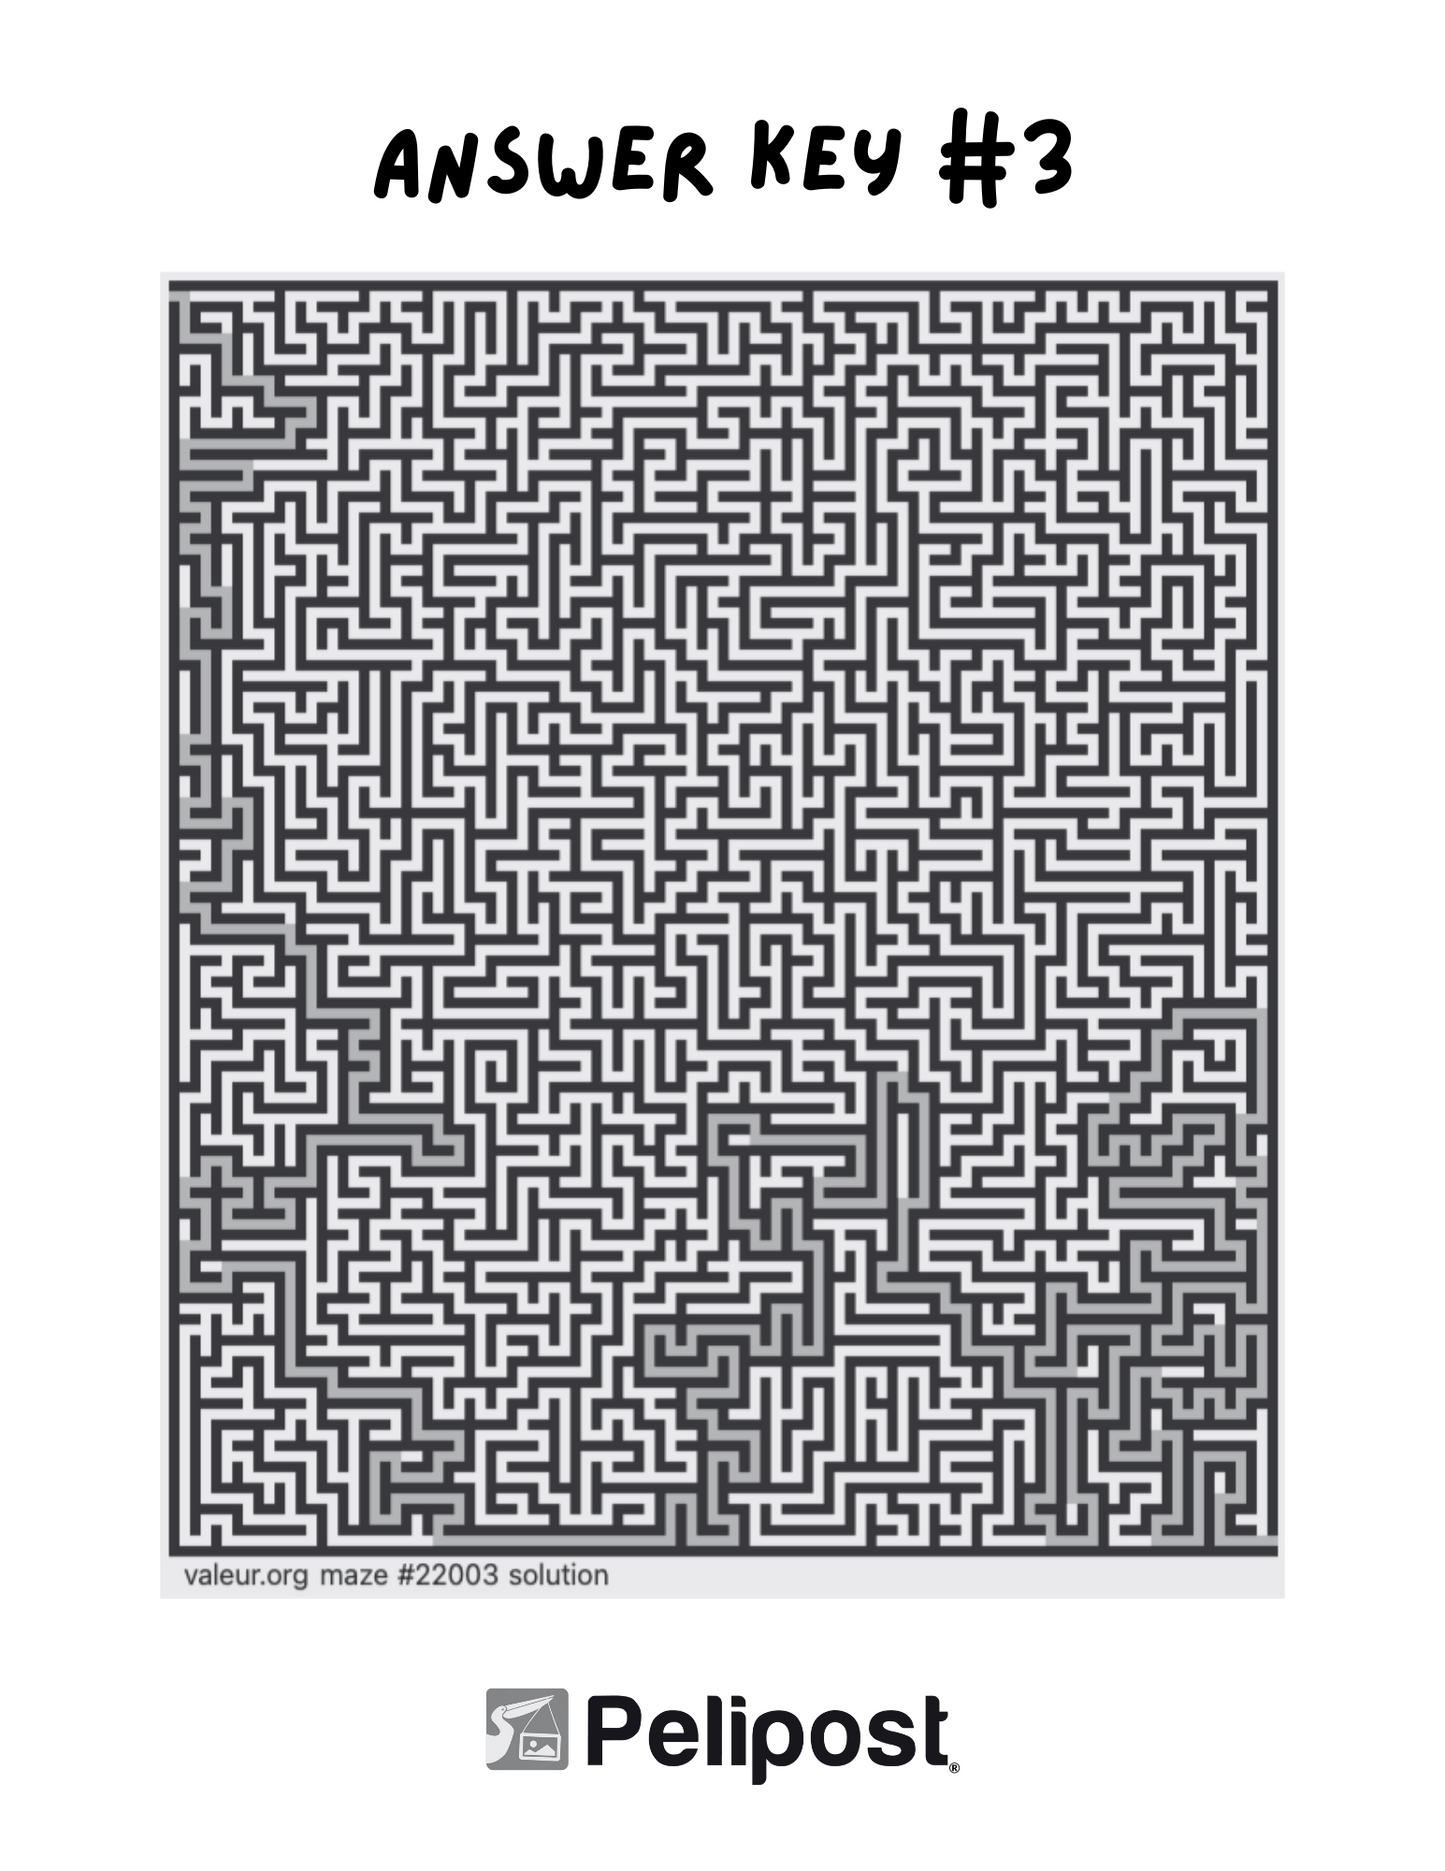 Maze #3  | FREE Digital Download